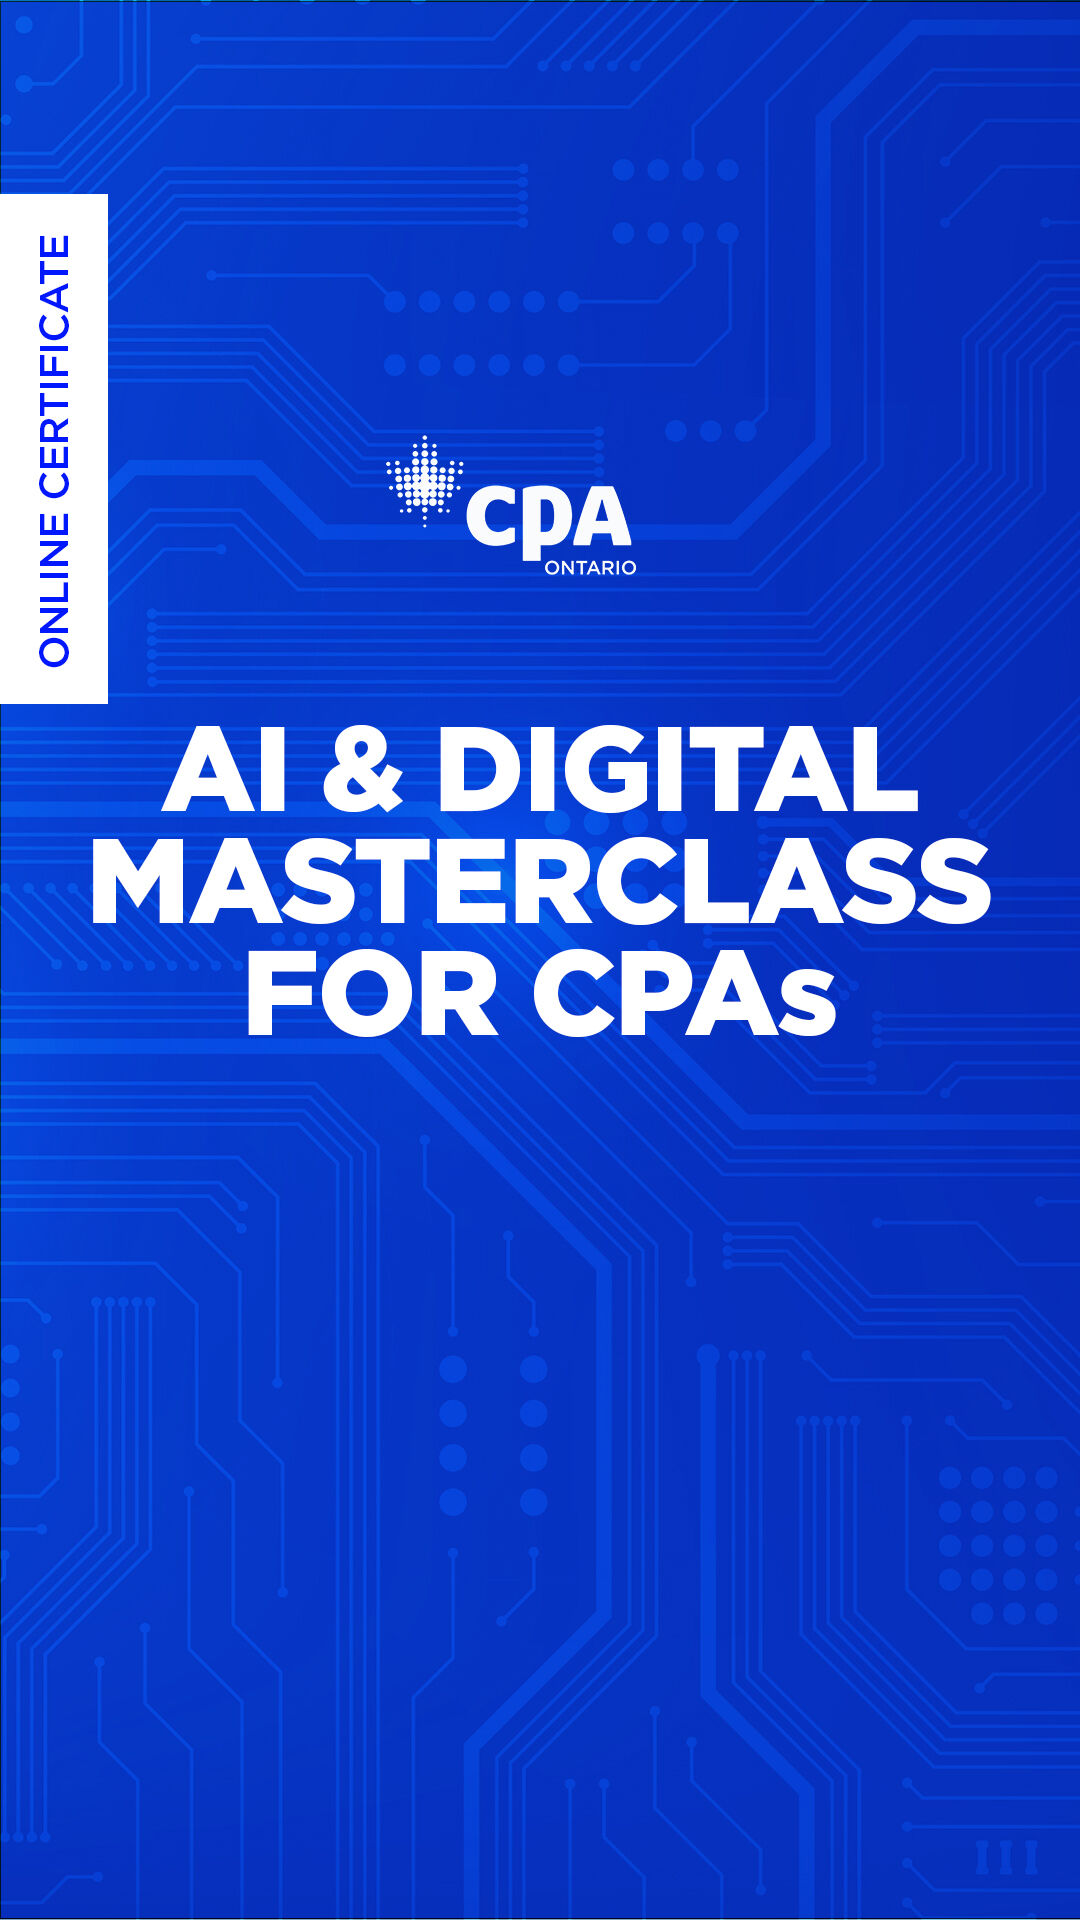 AI and digital masterclass for CPAs